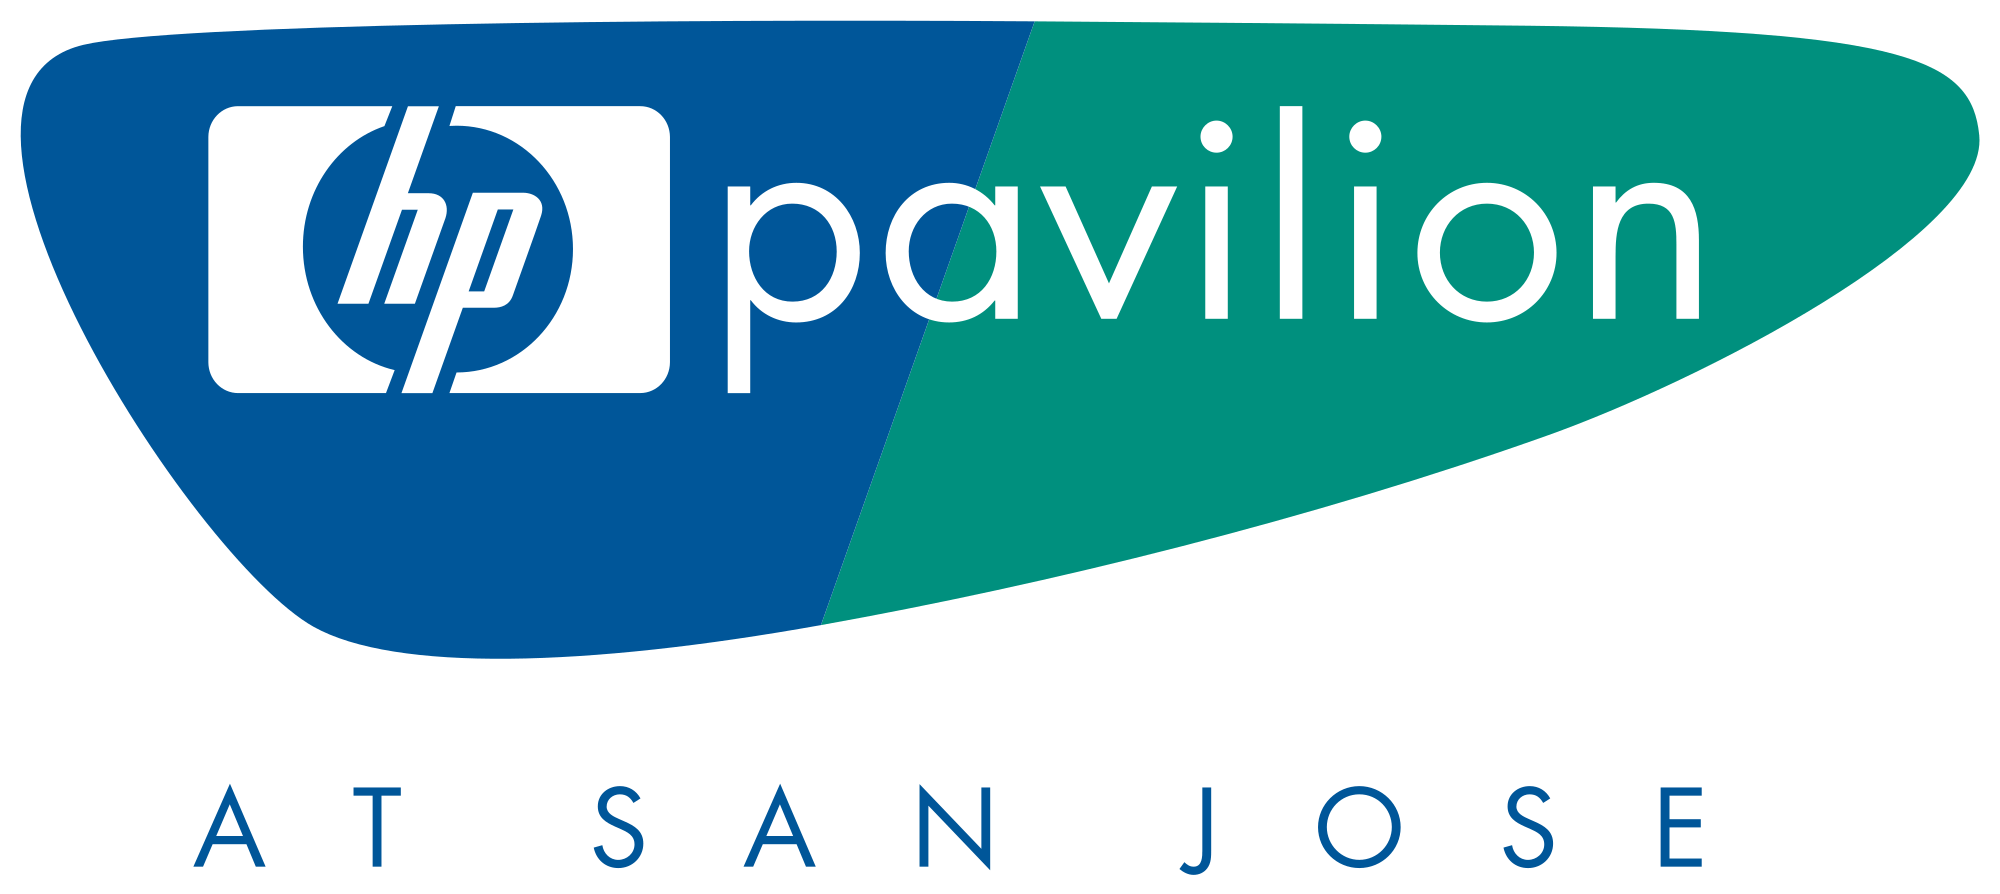 HP Pavilion Logo - File:HP Pavilion Logo.svg - Wikimedia Commons